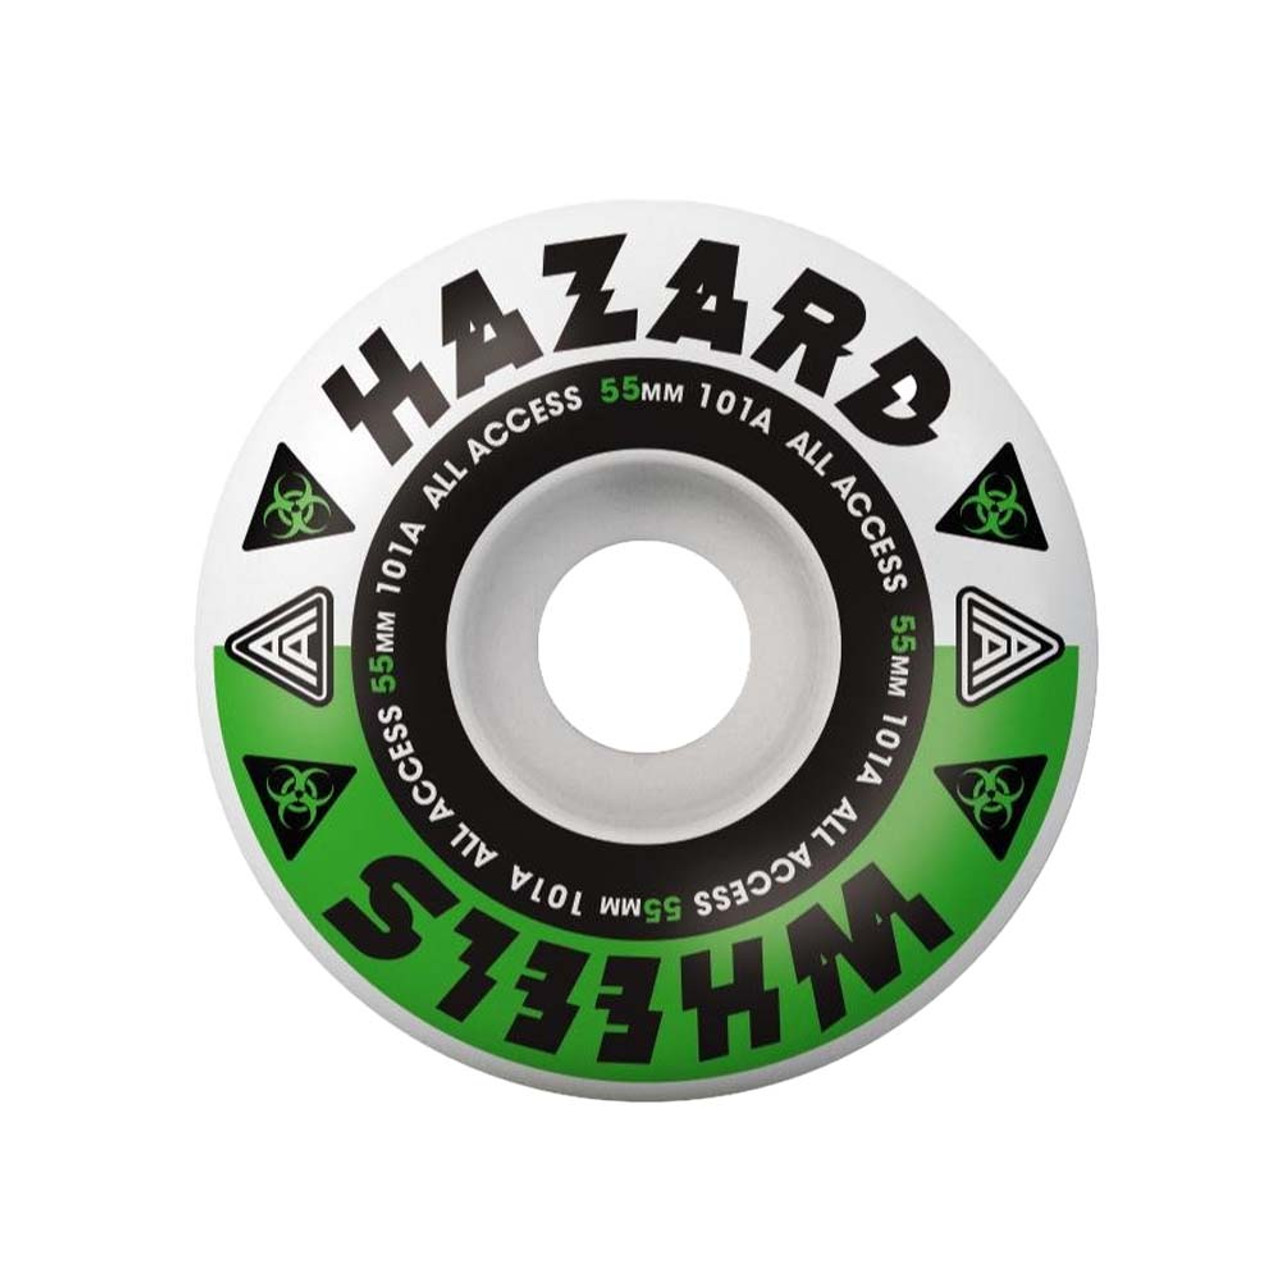 HAZARD Melt Down All Access Radial Wheels White/Green 55mm